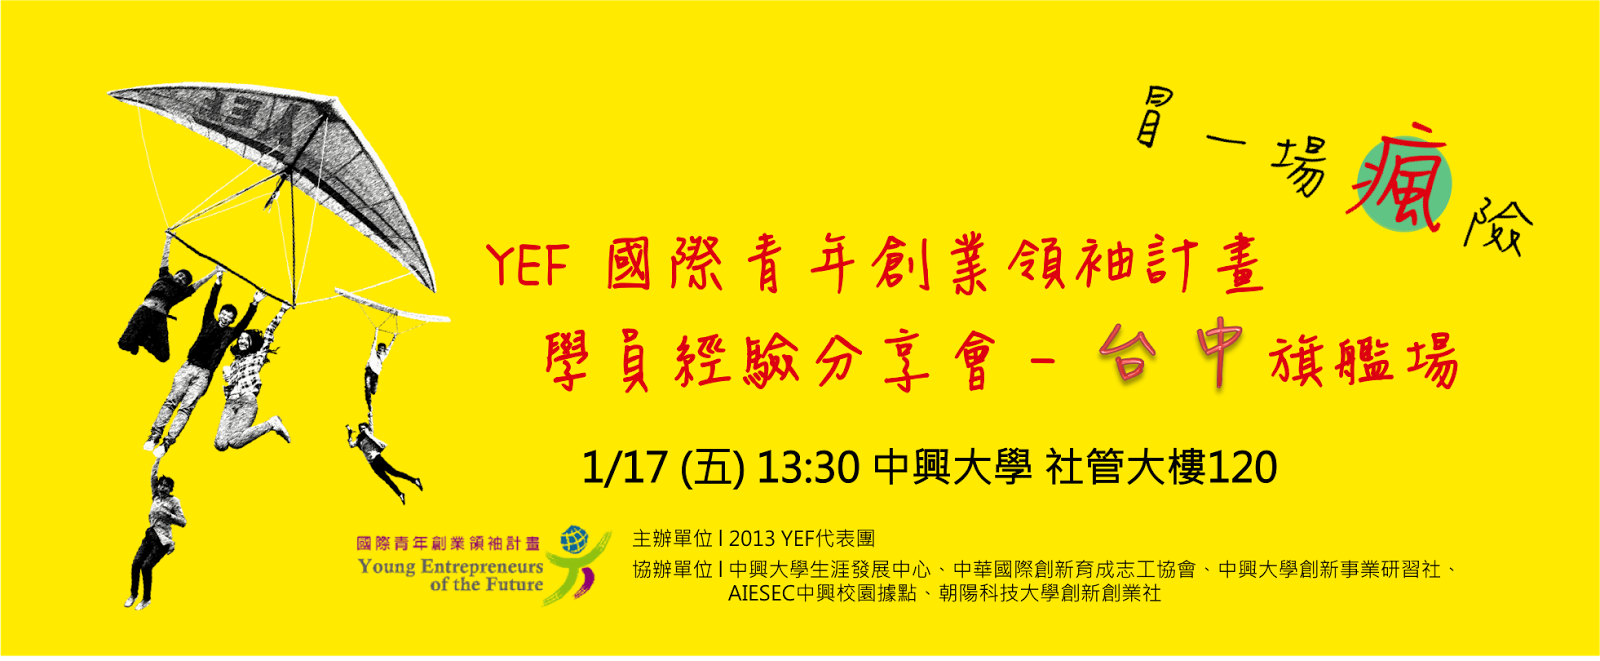 2014YEF國際青年創業領袖計畫 【台中旗艦場】學員經驗分享會